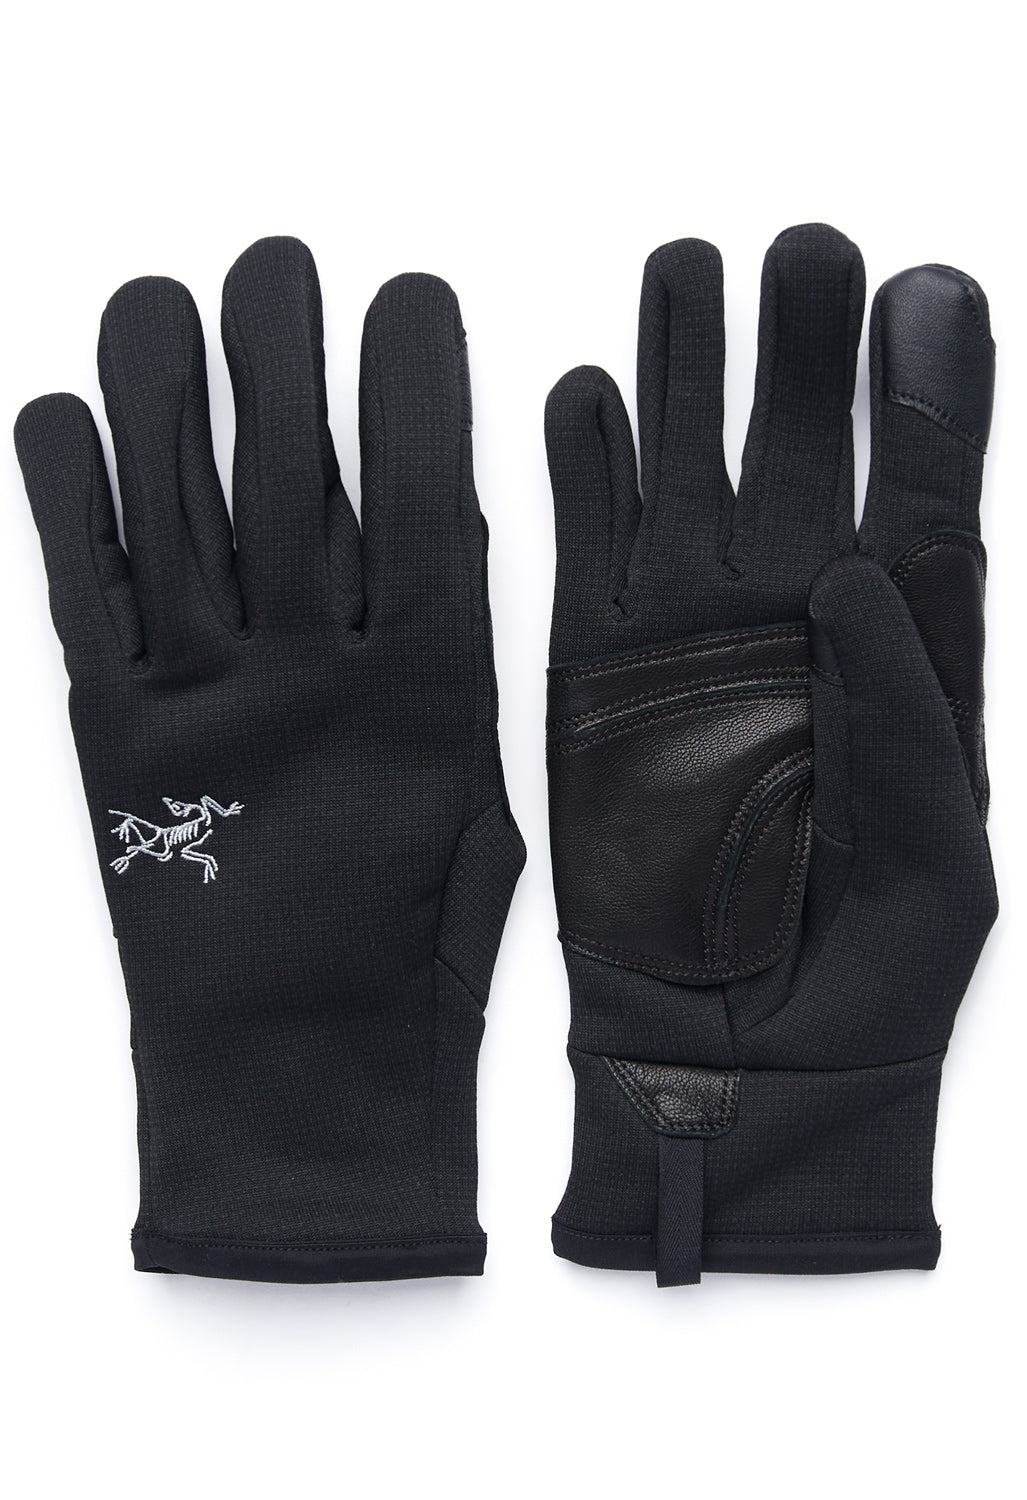 Arc'teryx Rivet Gloves - Black